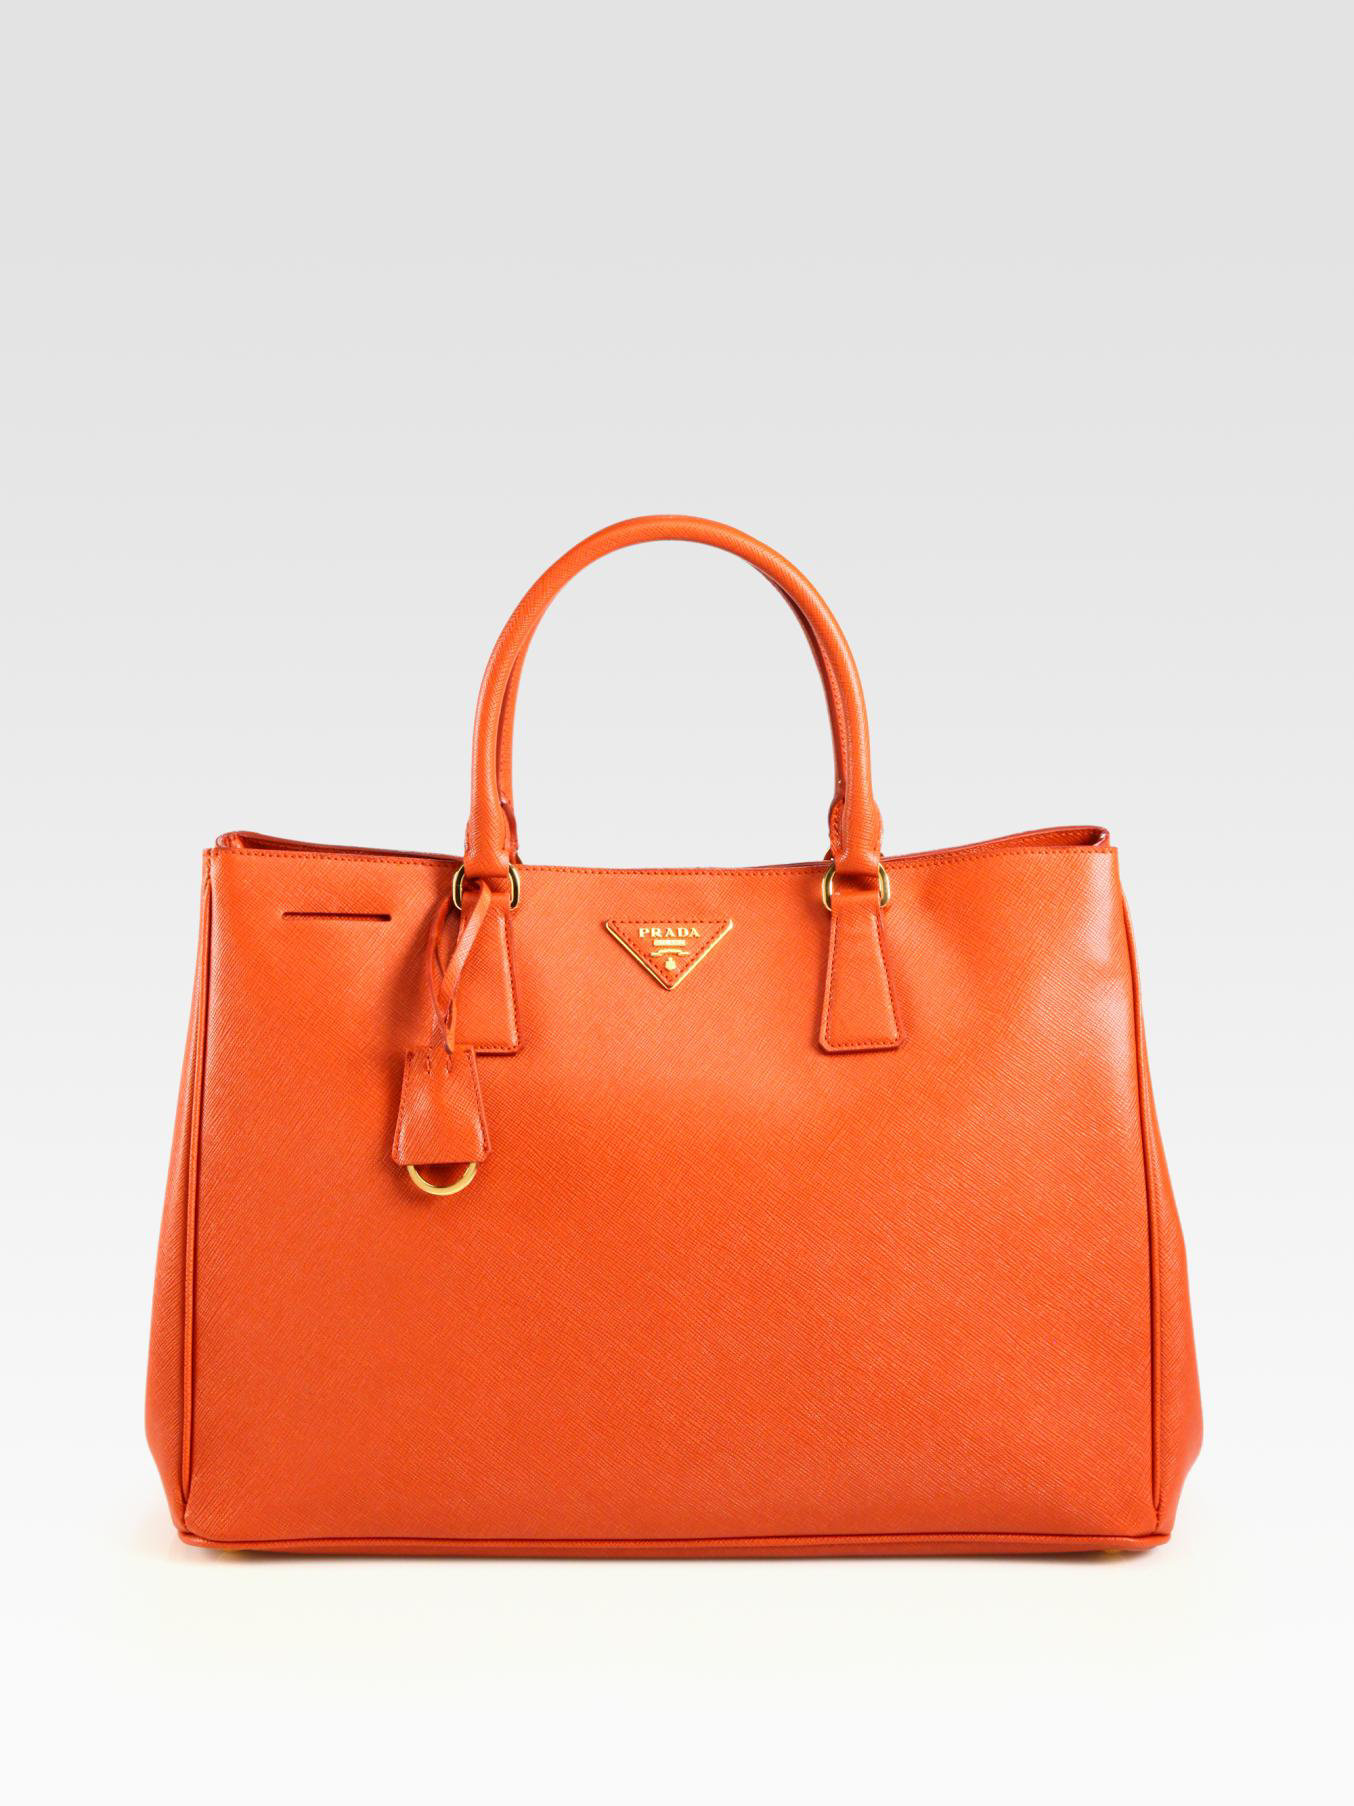 Lyst - Prada Saffiano Lux Tote Bag in Orange